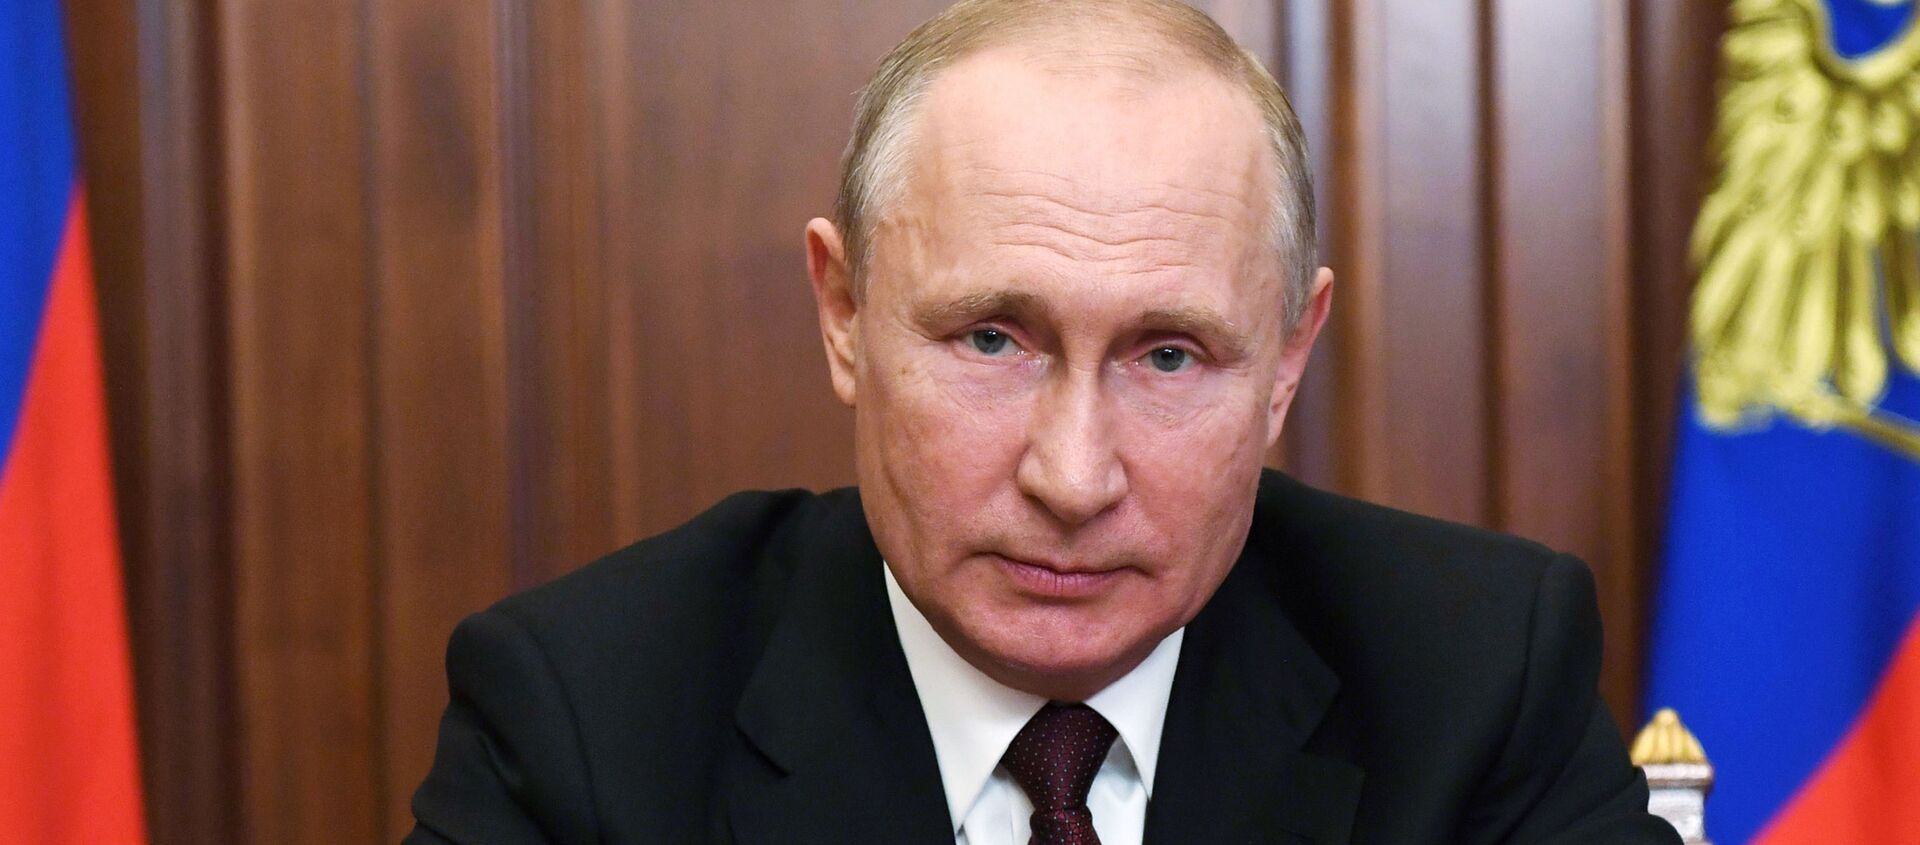 Vladímir Putin, presidente de Rusia - Sputnik Mundo, 1920, 06.10.2020